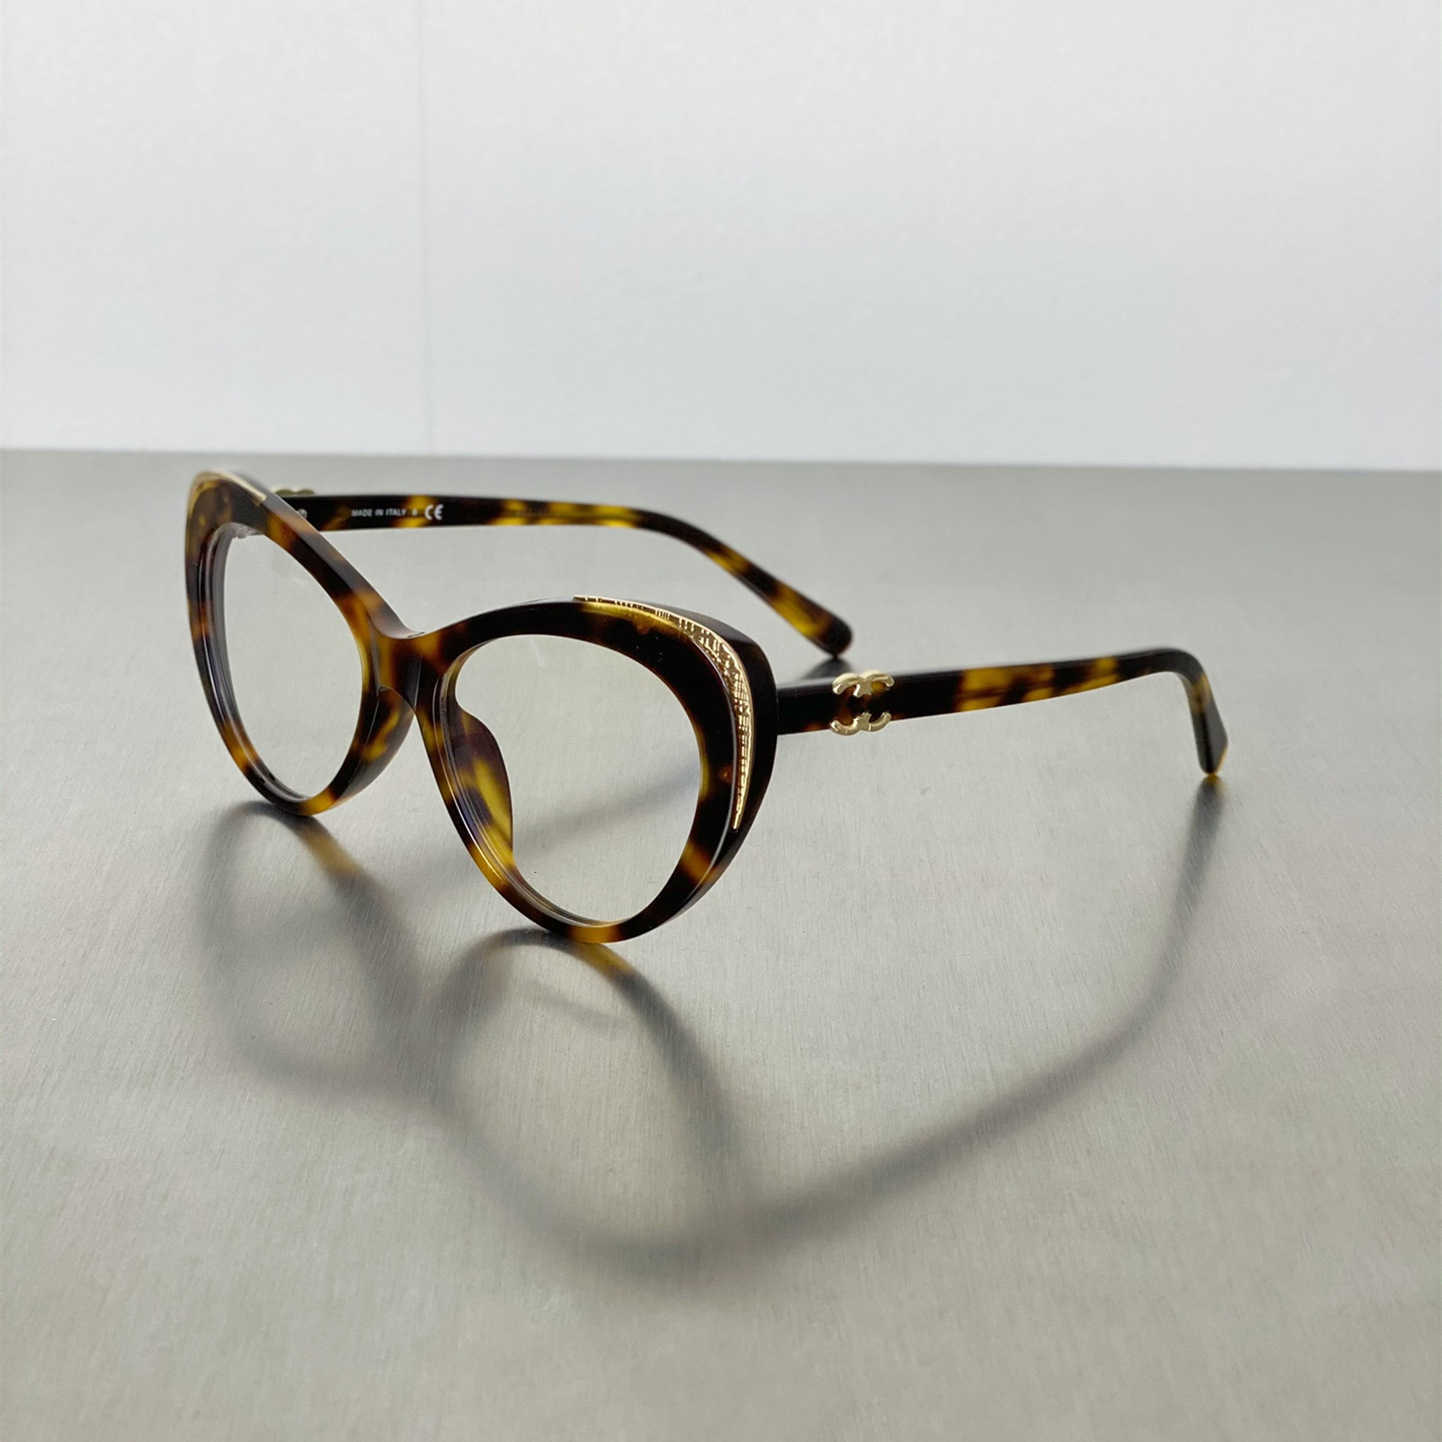 High quality fashionable luxury designer sunglasses Black Plain Eyeglass Frame Temperament Gold Border Cat Eye Glasses New Network Red Same Style